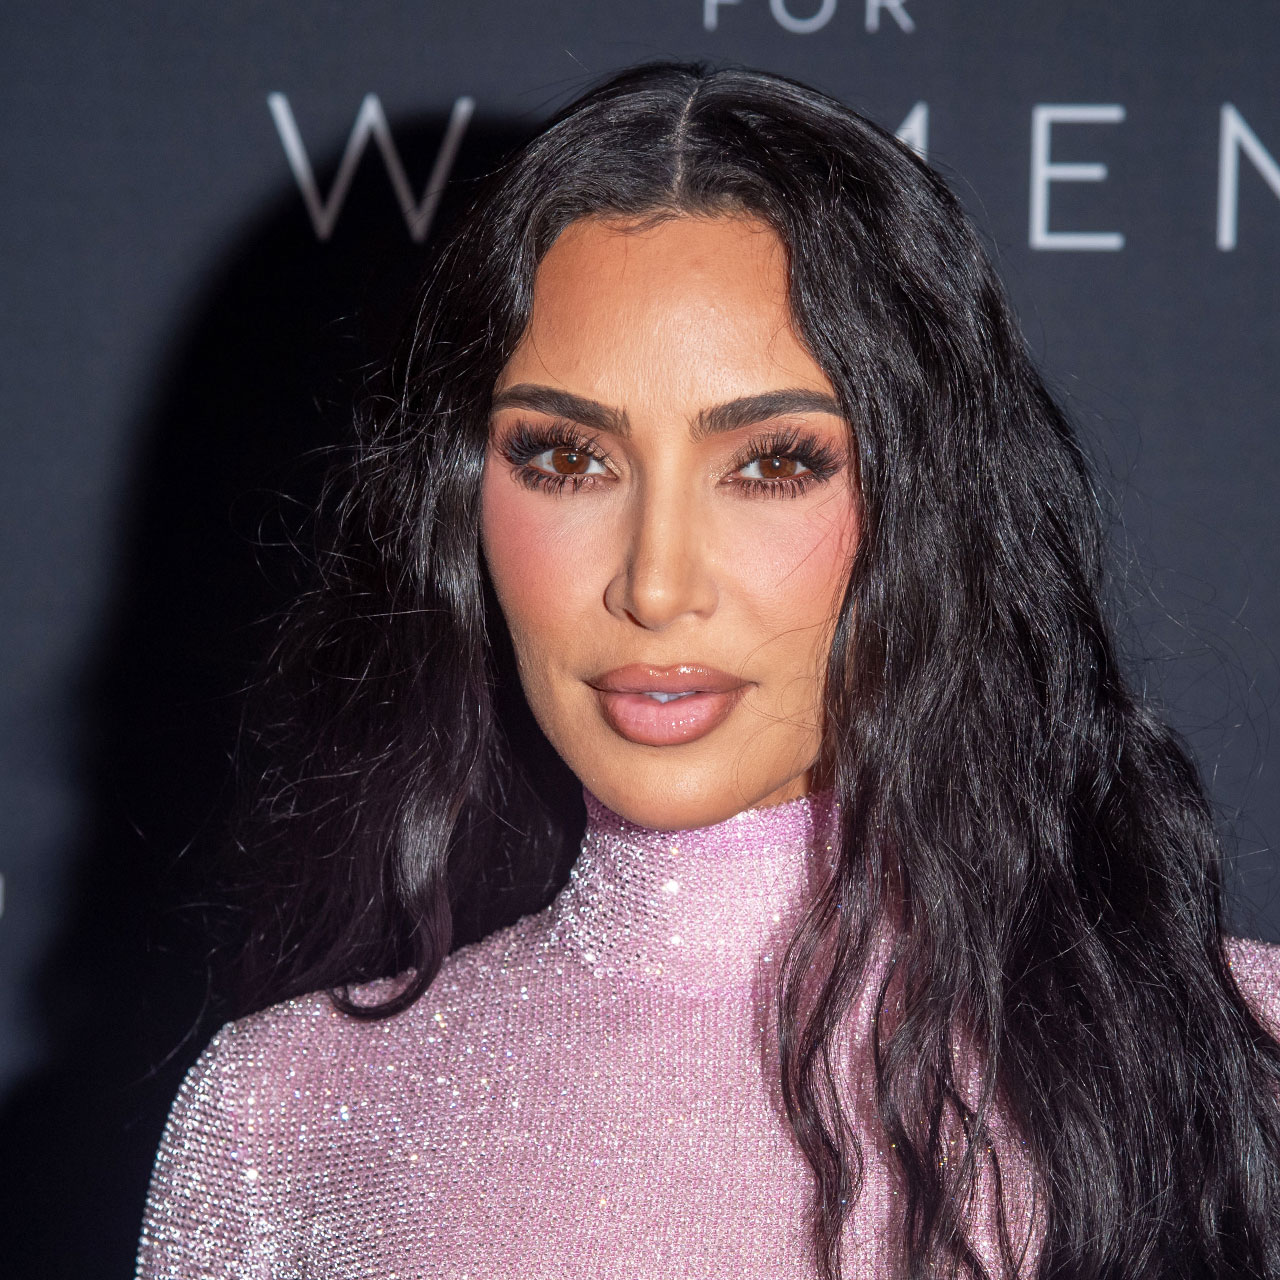 Fans Say Kim Kardashian Looks 'Unrecognizable' In New Ultra-Pale